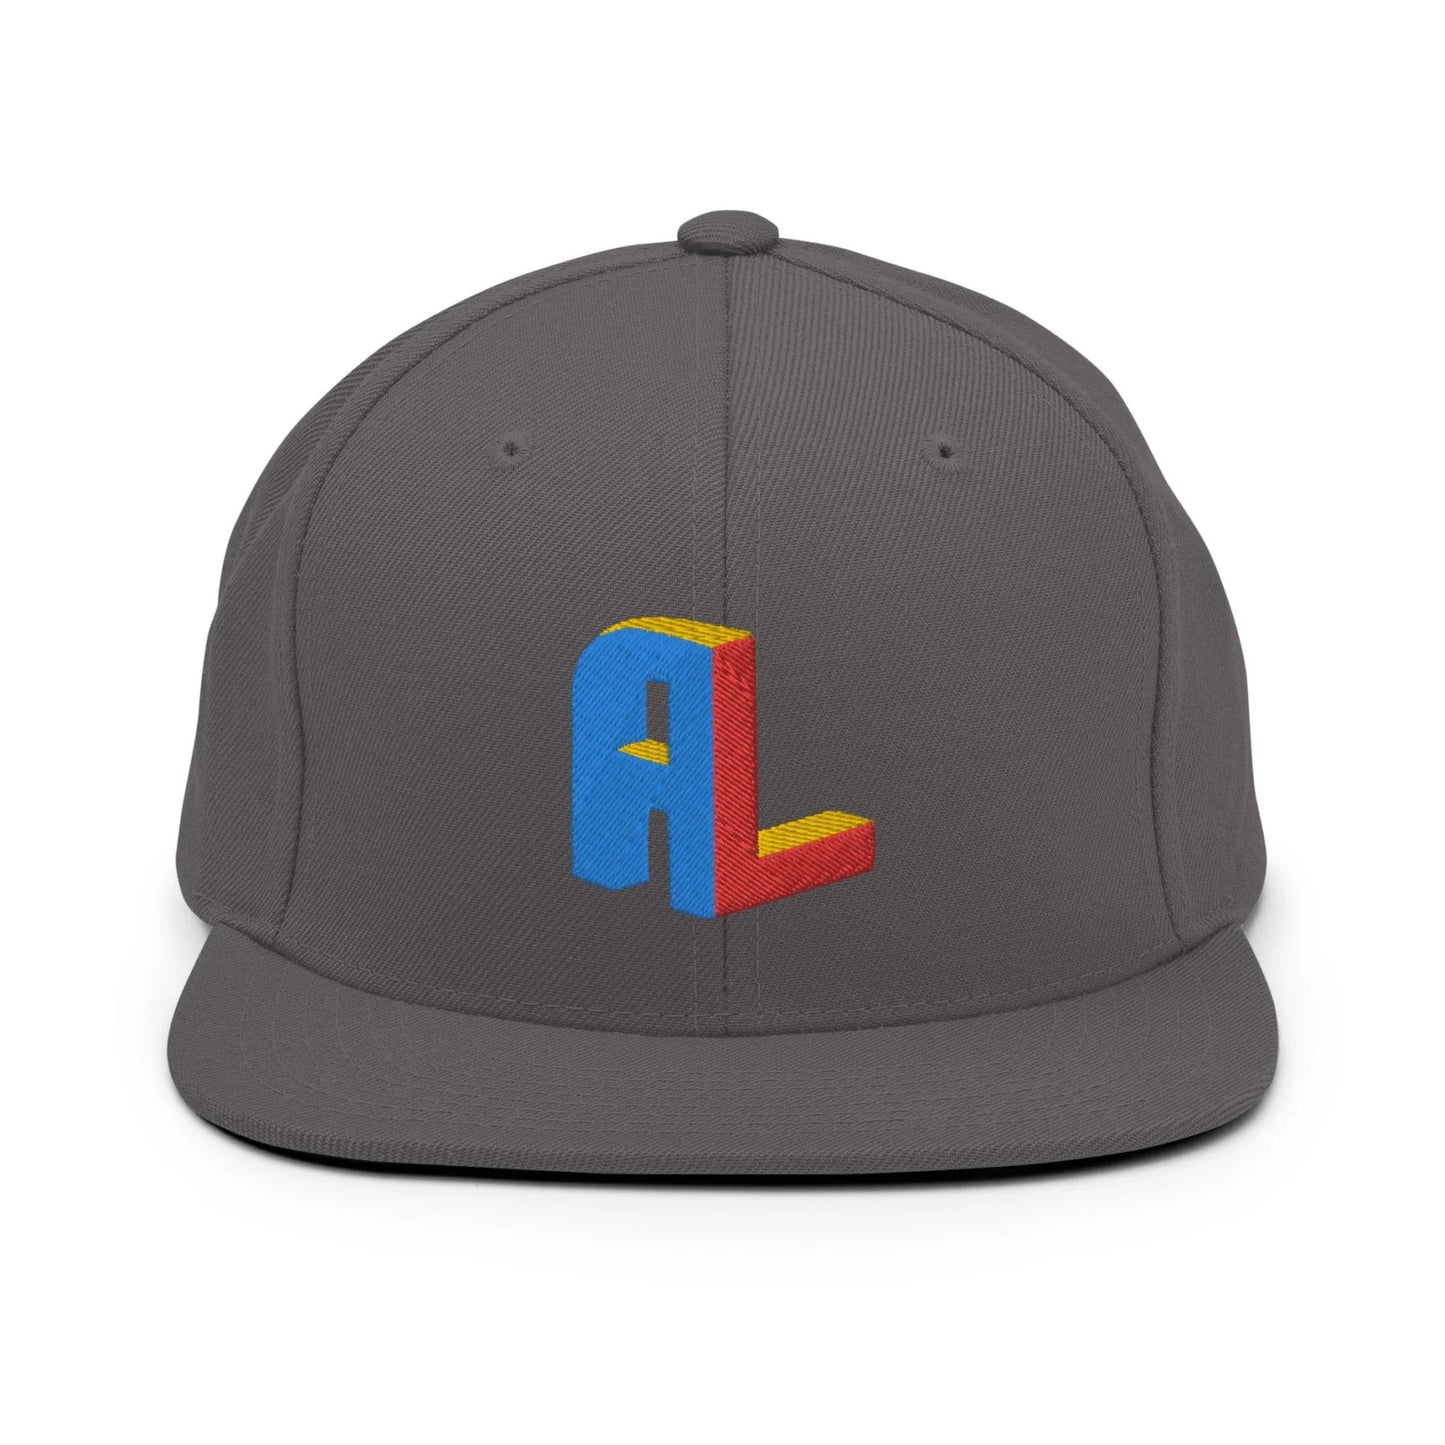 Ance Larmstrong ShowZone snapback hat in dark grey